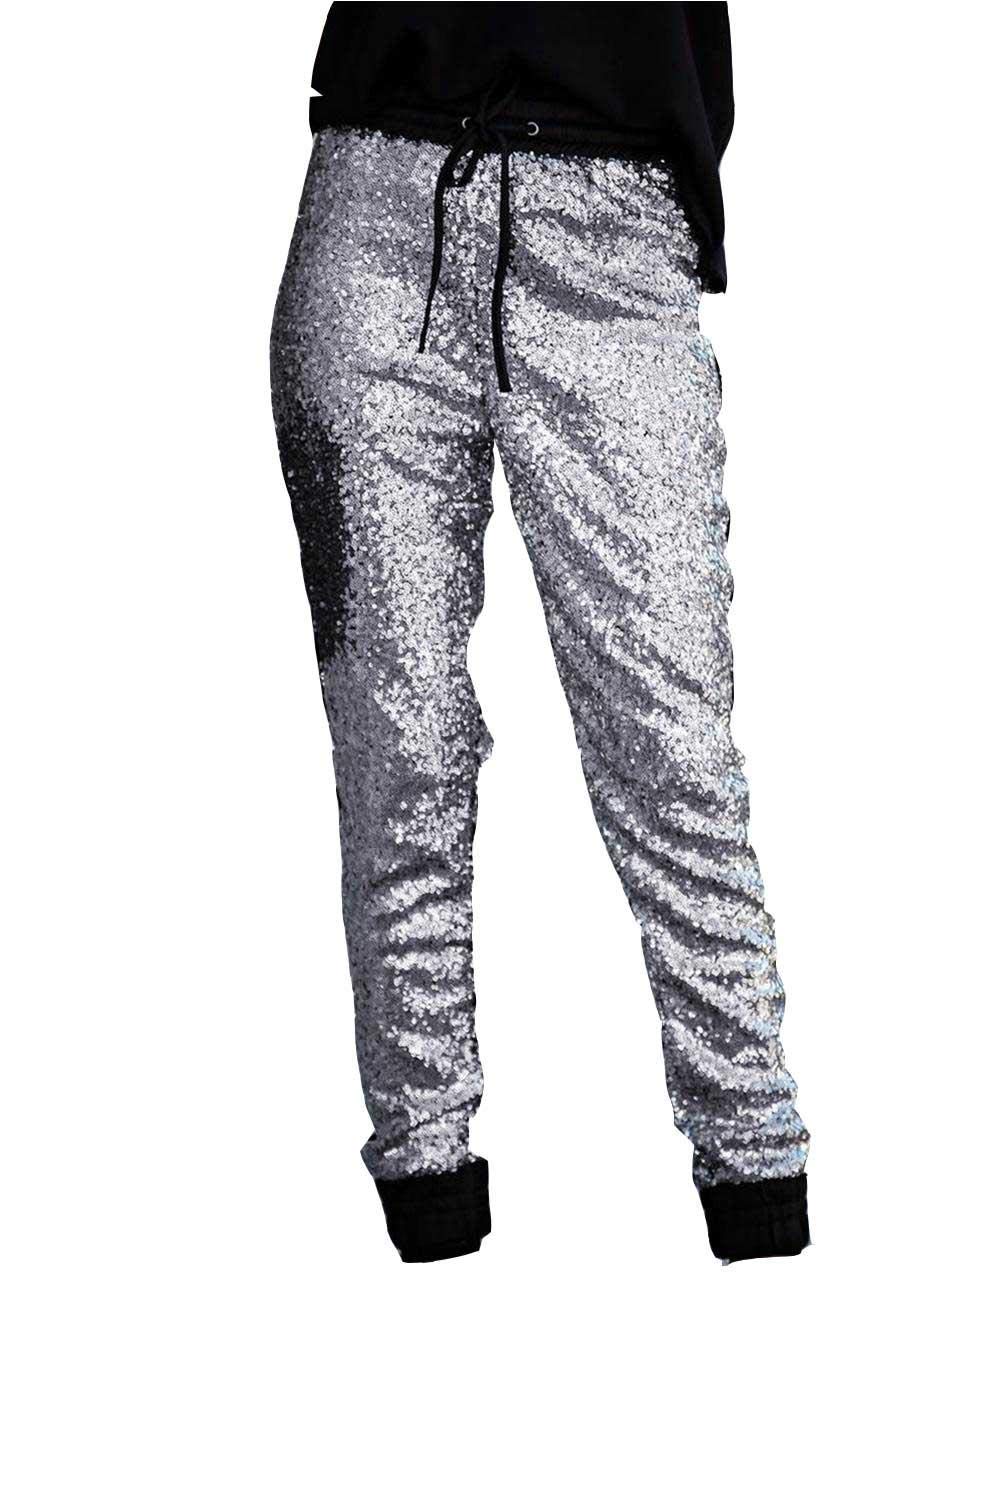 Pantaloon fashion Joggers large silver sequin Color Silver Size L